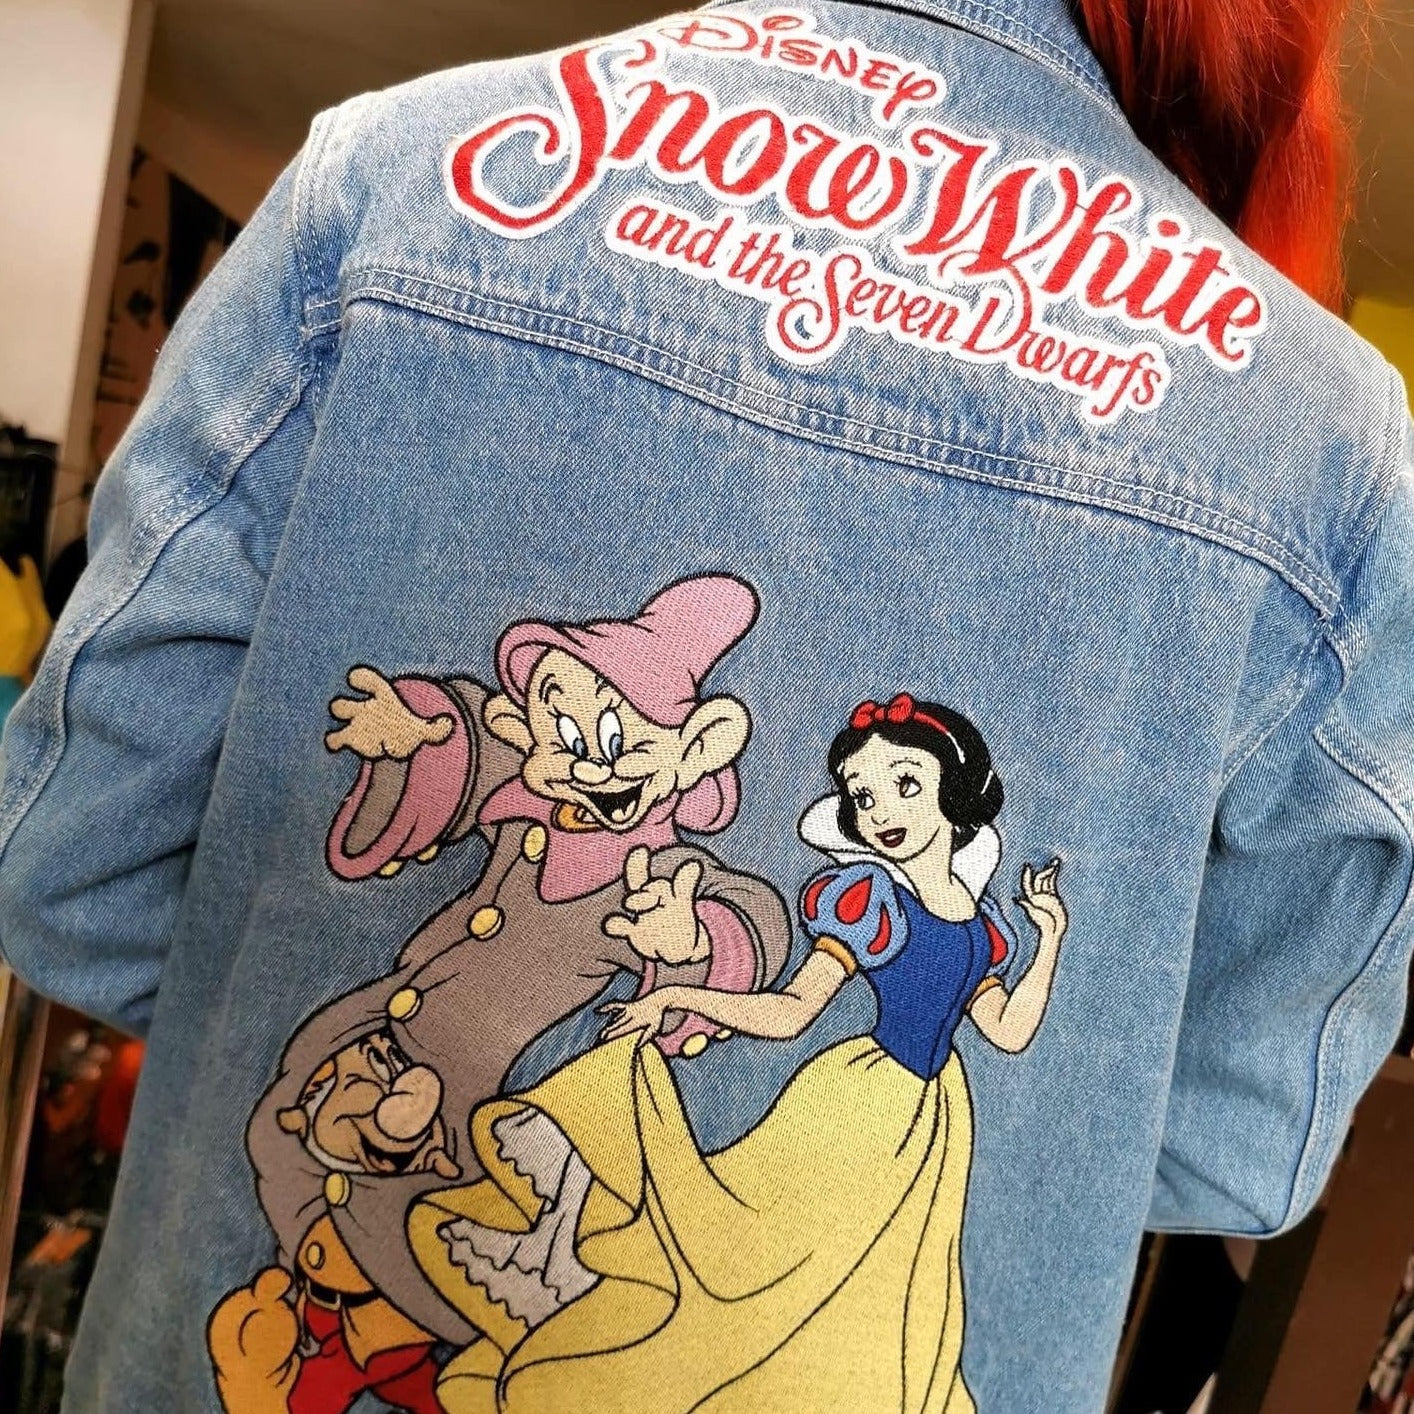 Snow White and the Seven Dwarves Anniversary Denim Jacket - Cakeworthy